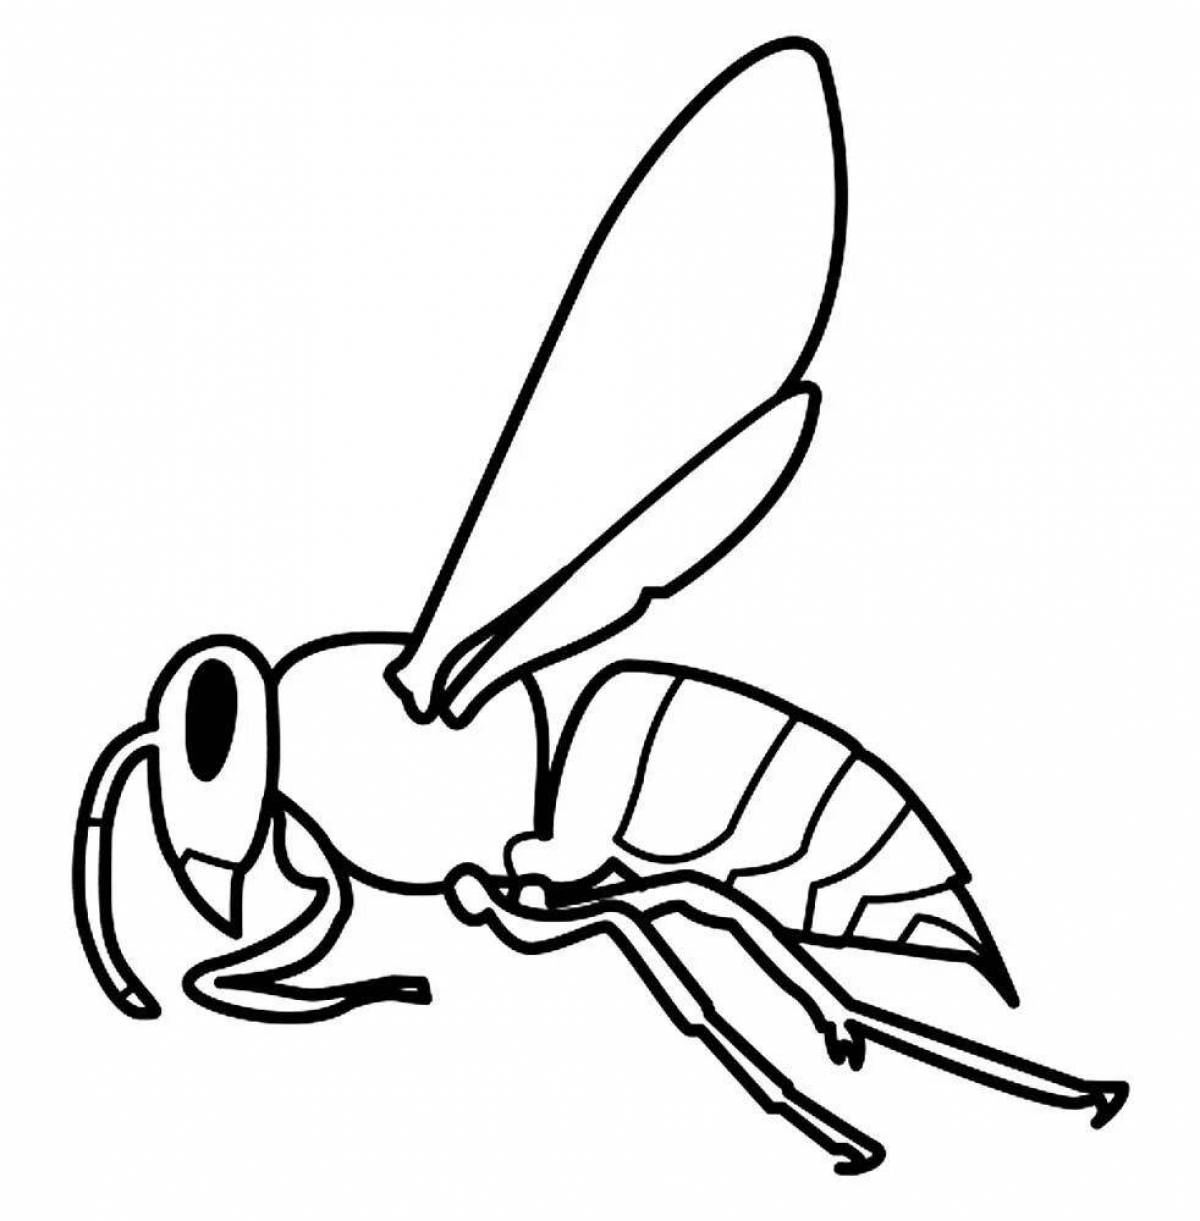 Joyful wasp coloring book for kids